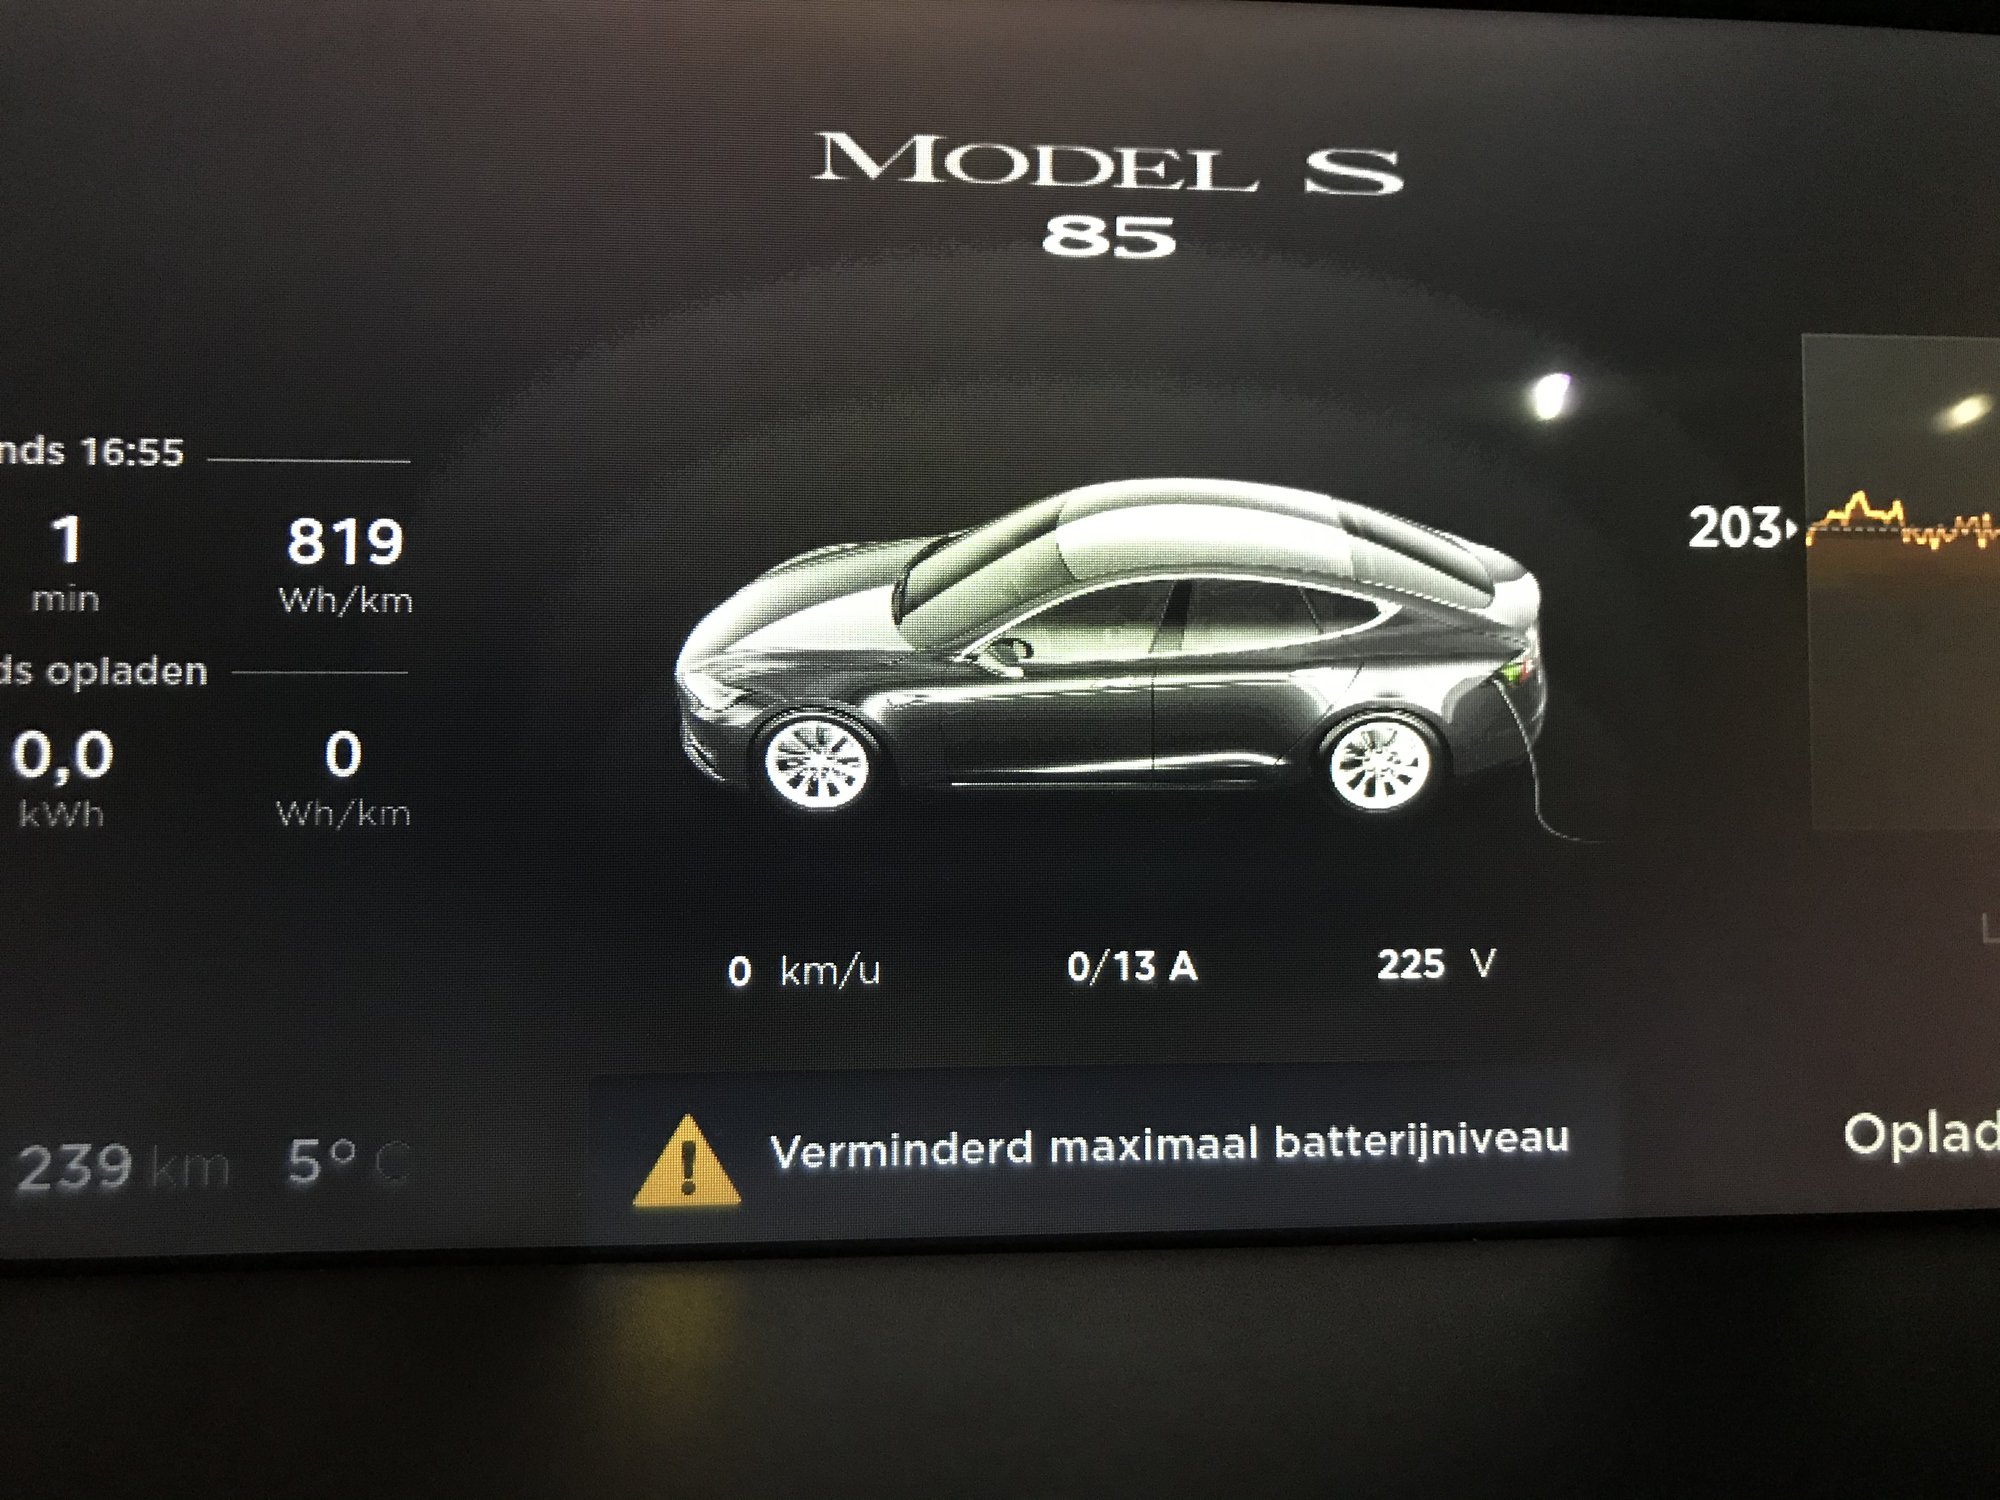 Verminderd maximaal batterijniveau | Tesla Motors Club